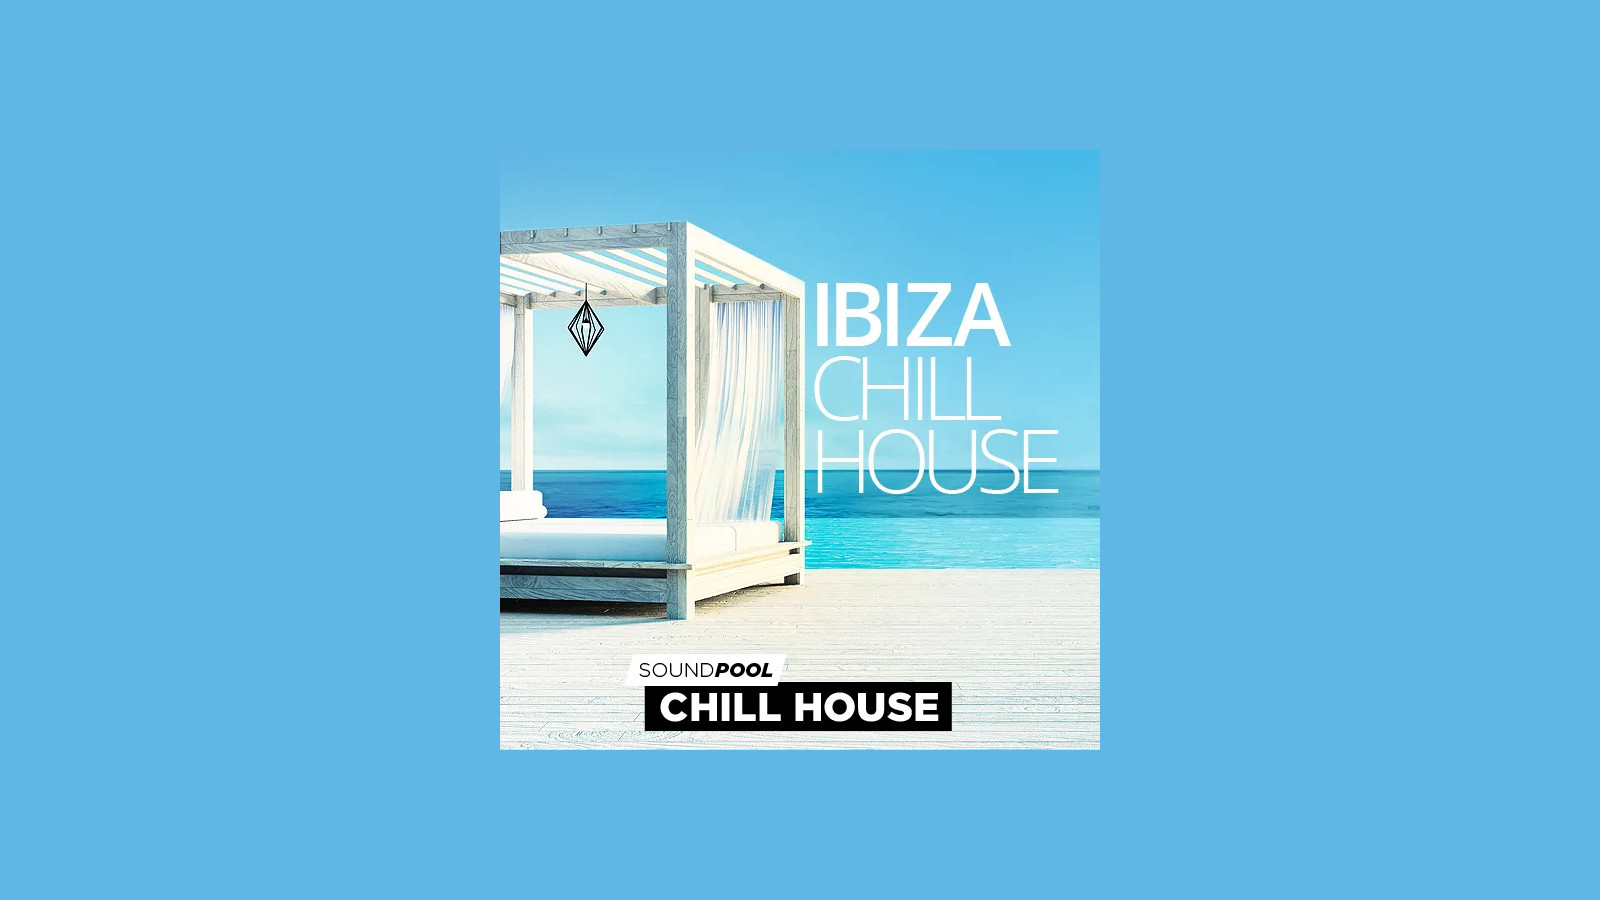 MAGIX Soundpool Ibiza Chill House ProducerPlanet CD Key 5.65 $